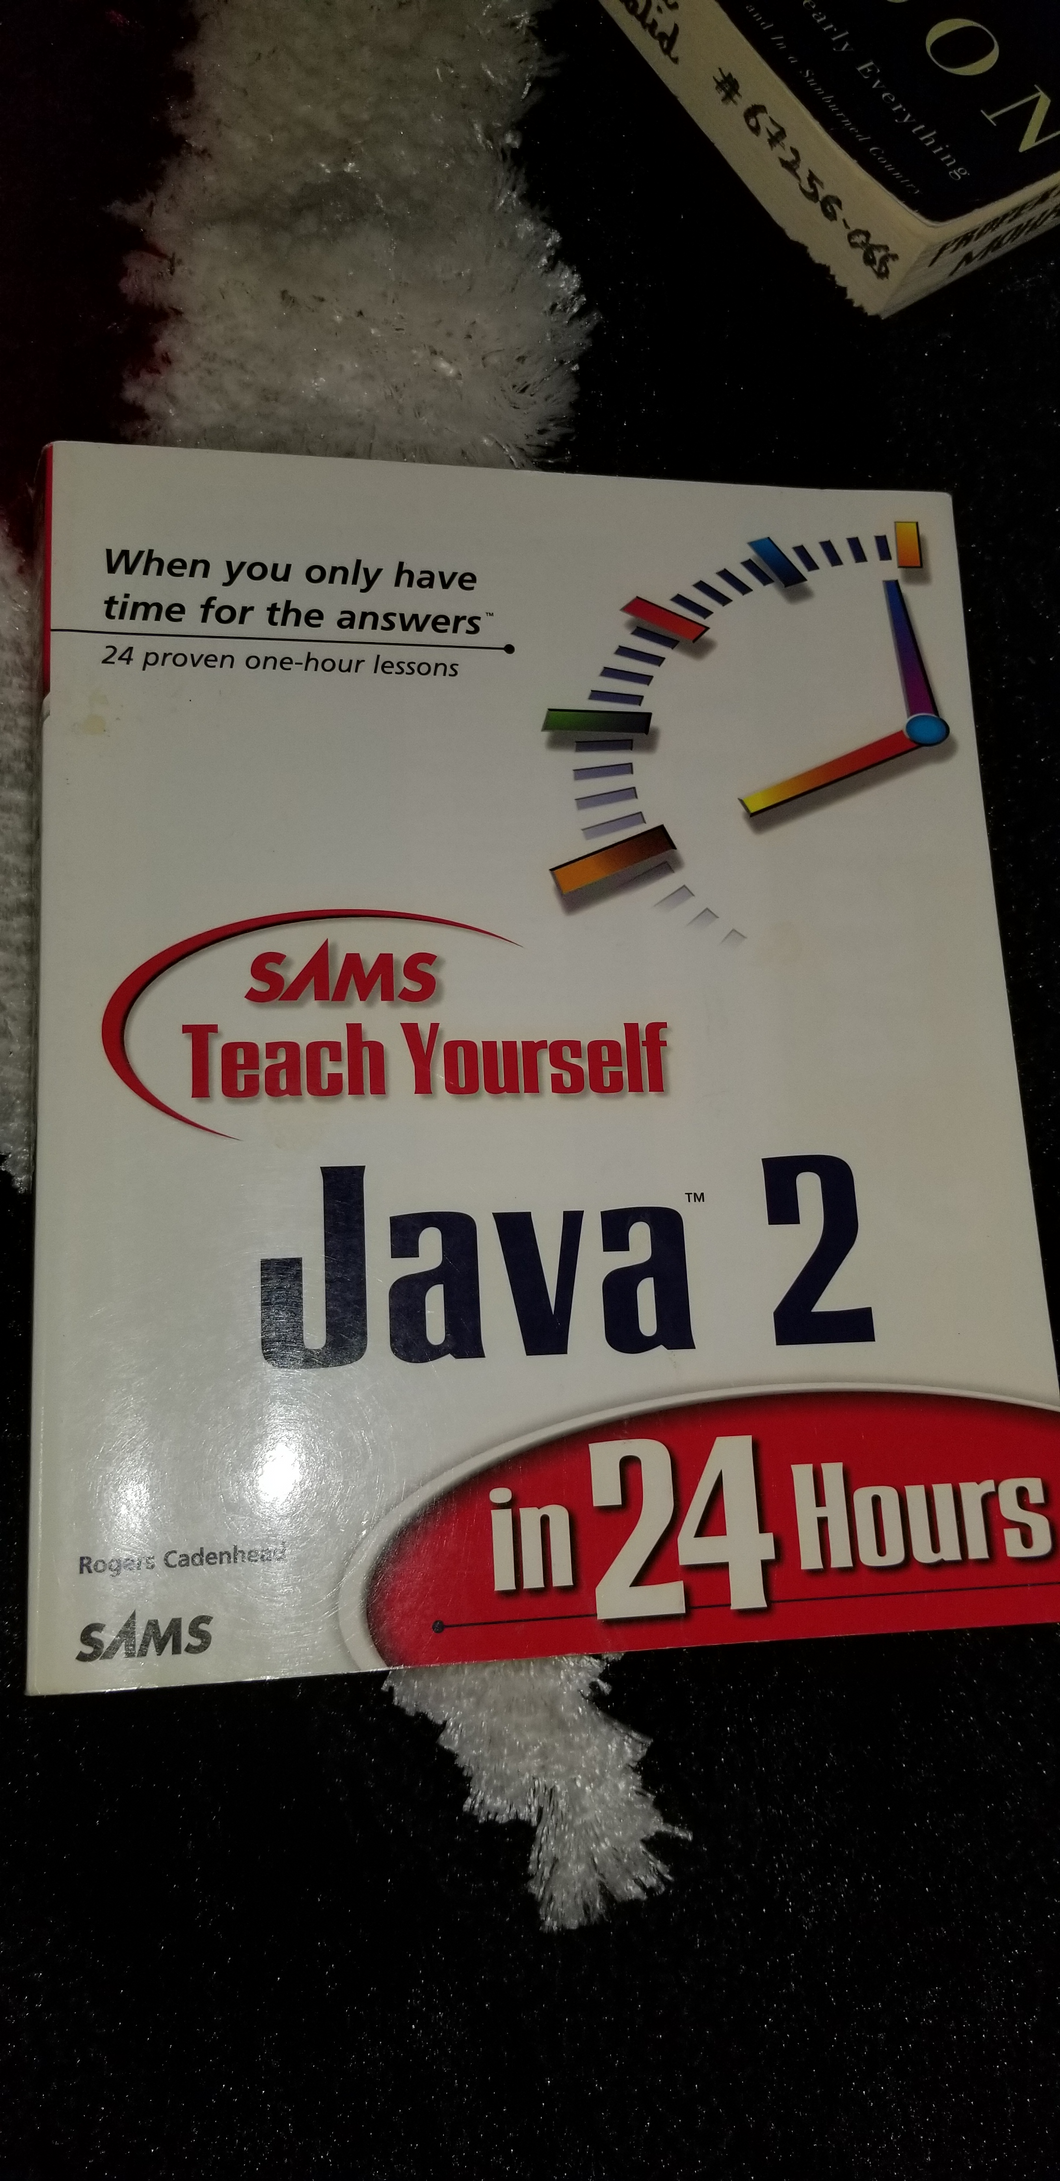 Sams Teach Yourself Java 2 in 24 Hours By Rogers Cadenhead, Mark Taber - Perfume Gallery